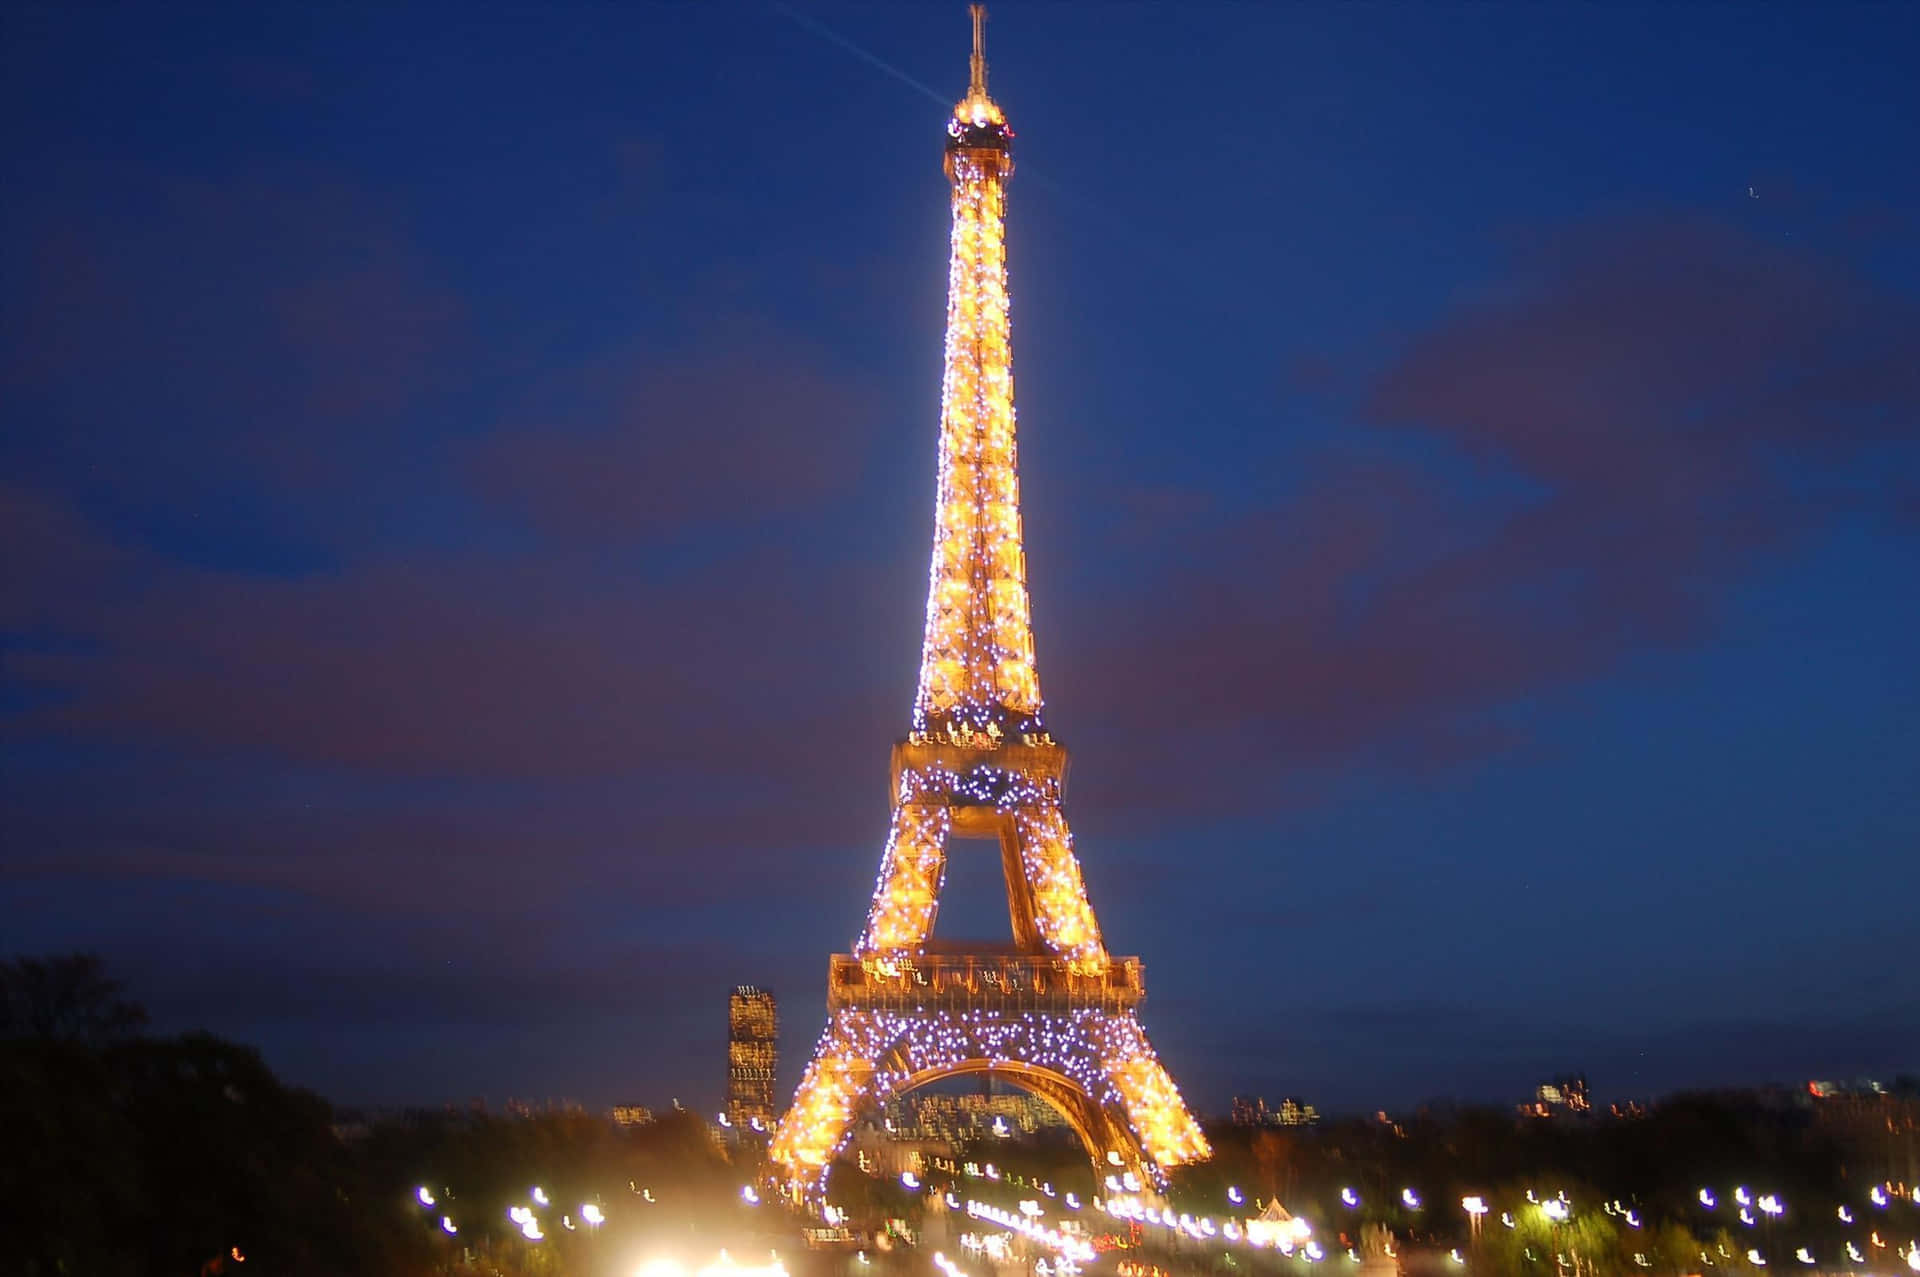 Paris, City of Lights: Eiffel Tower